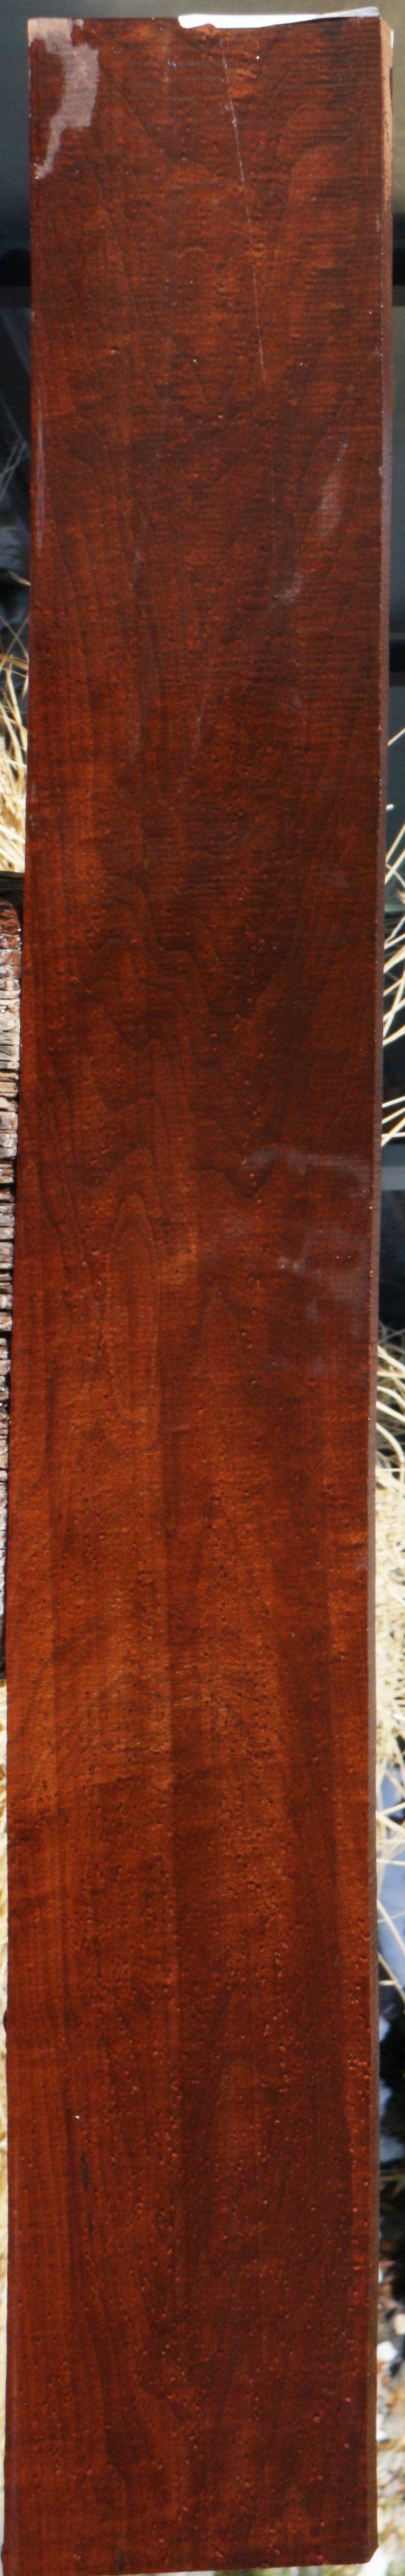 Extra Fancy Caramelized Maple Burl Lumber